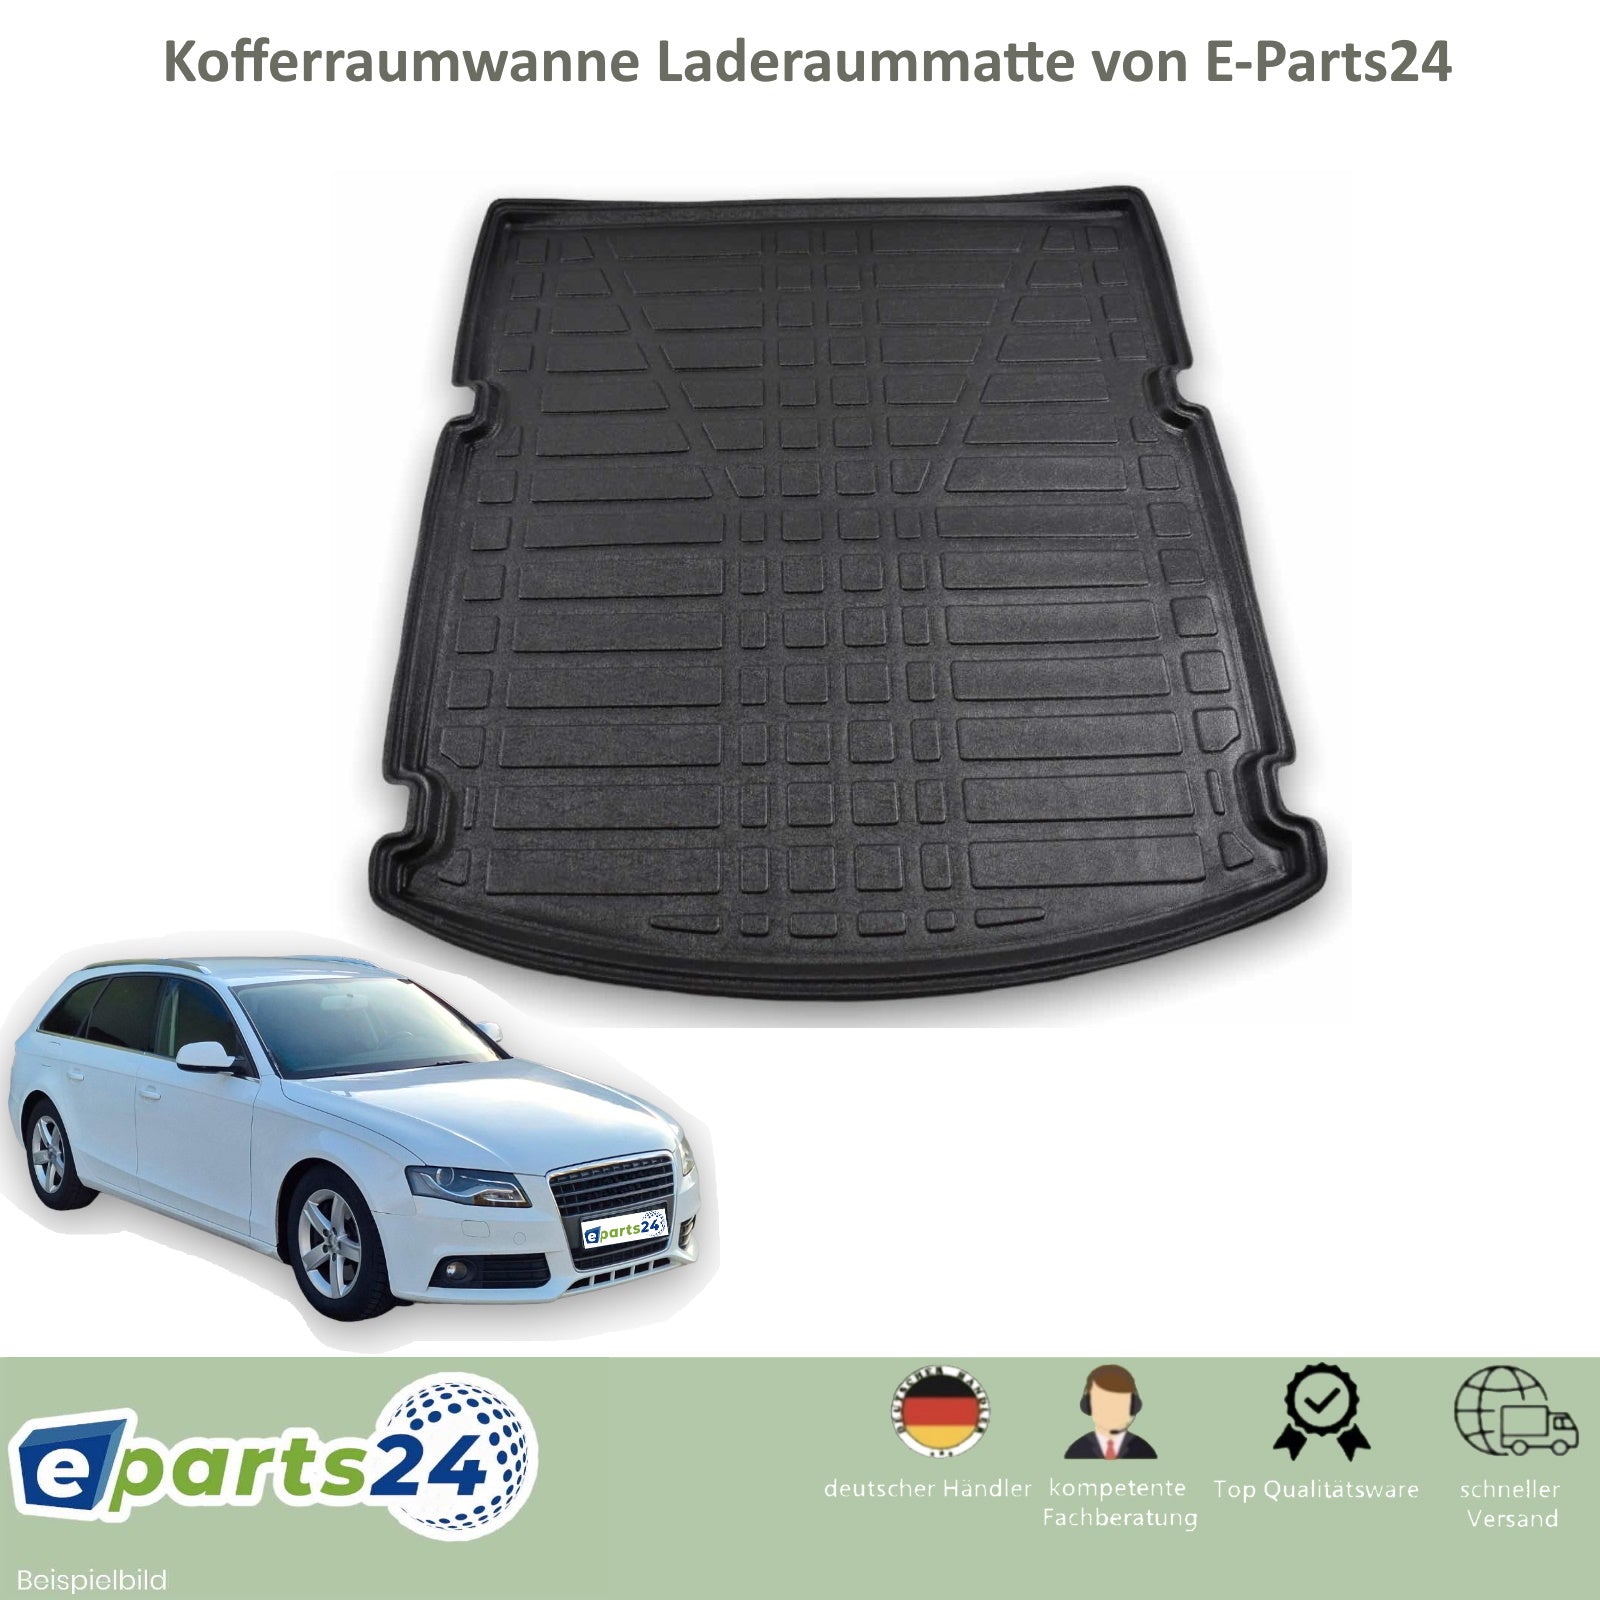 Kofferraumwanne Kofferraummatte 200 E-Parts24 Avant A4 für – Laderaumwanne B8 Audi